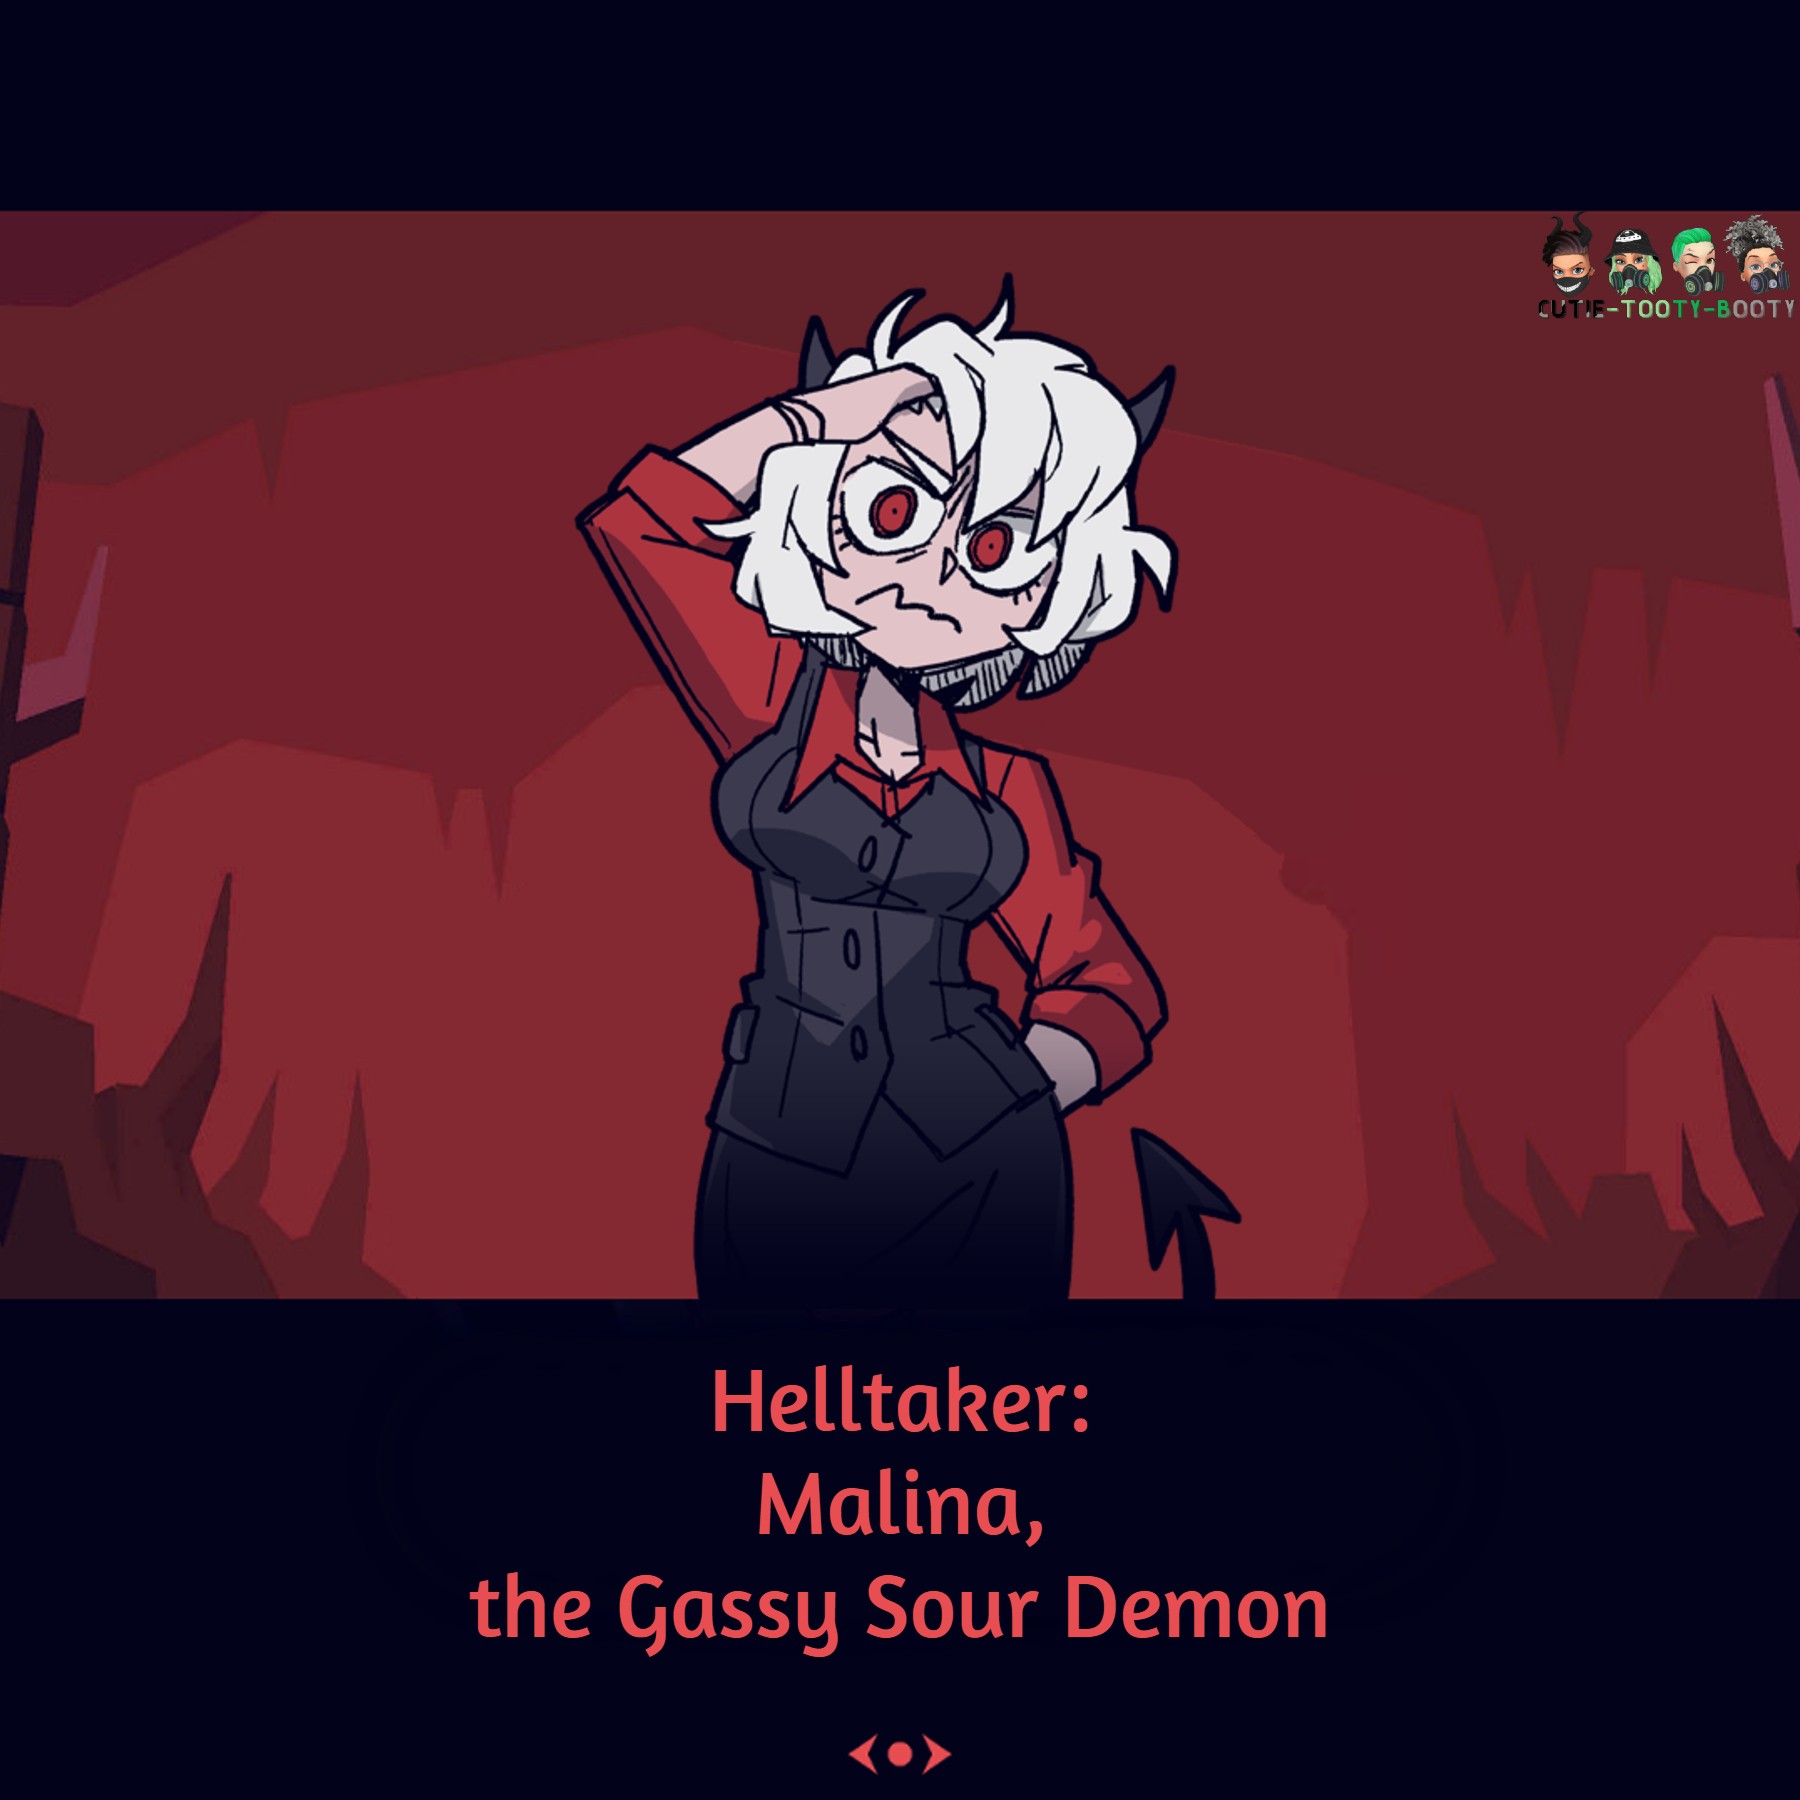 Helltaker: Malina, the Gassy Sour Demon